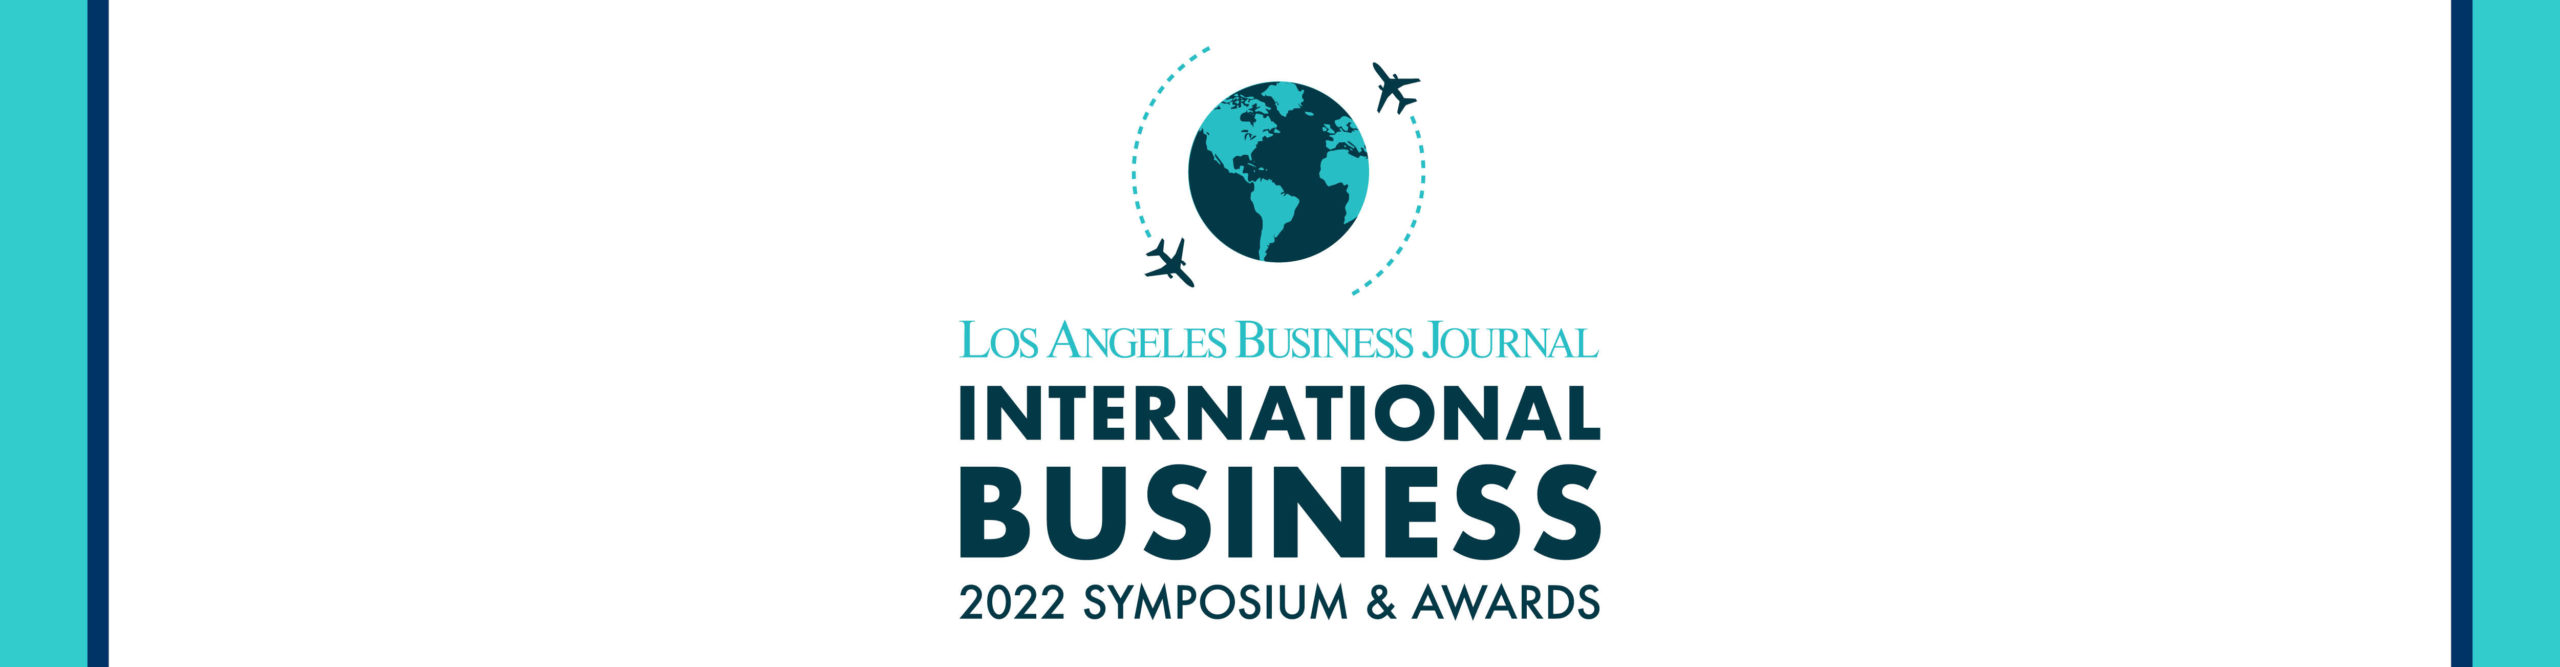 International Business Symposium & Awards Event Banner